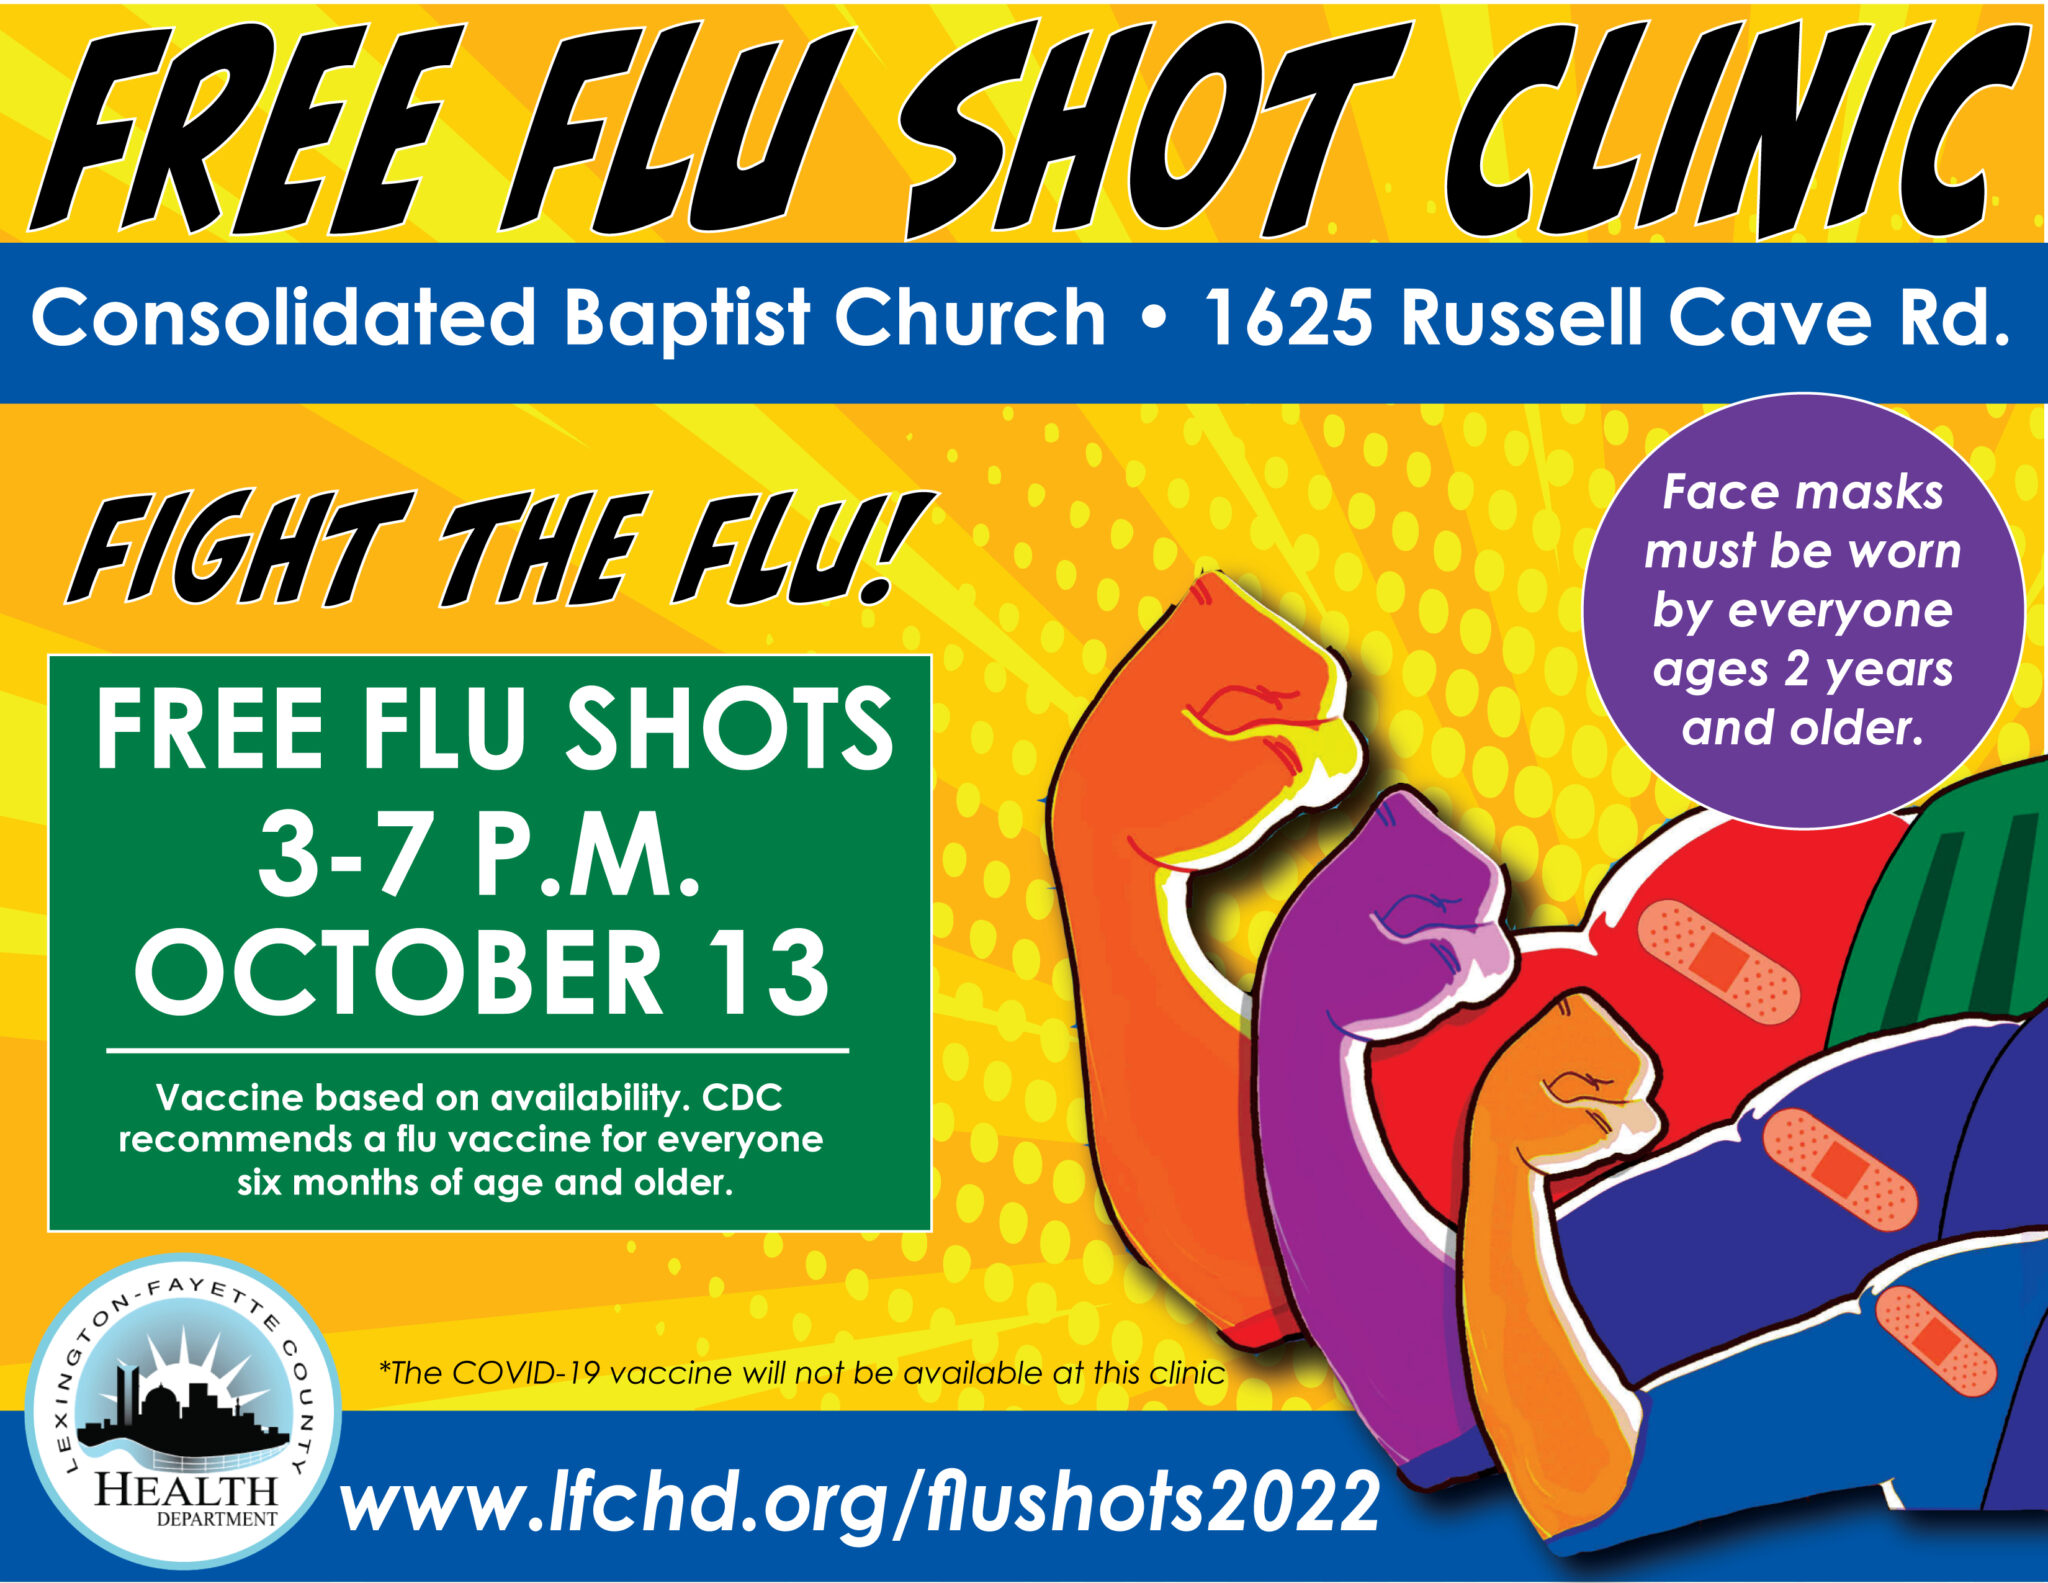 2022 LFCHD Free Flu Shot Clinic LexingtonFayette County Health